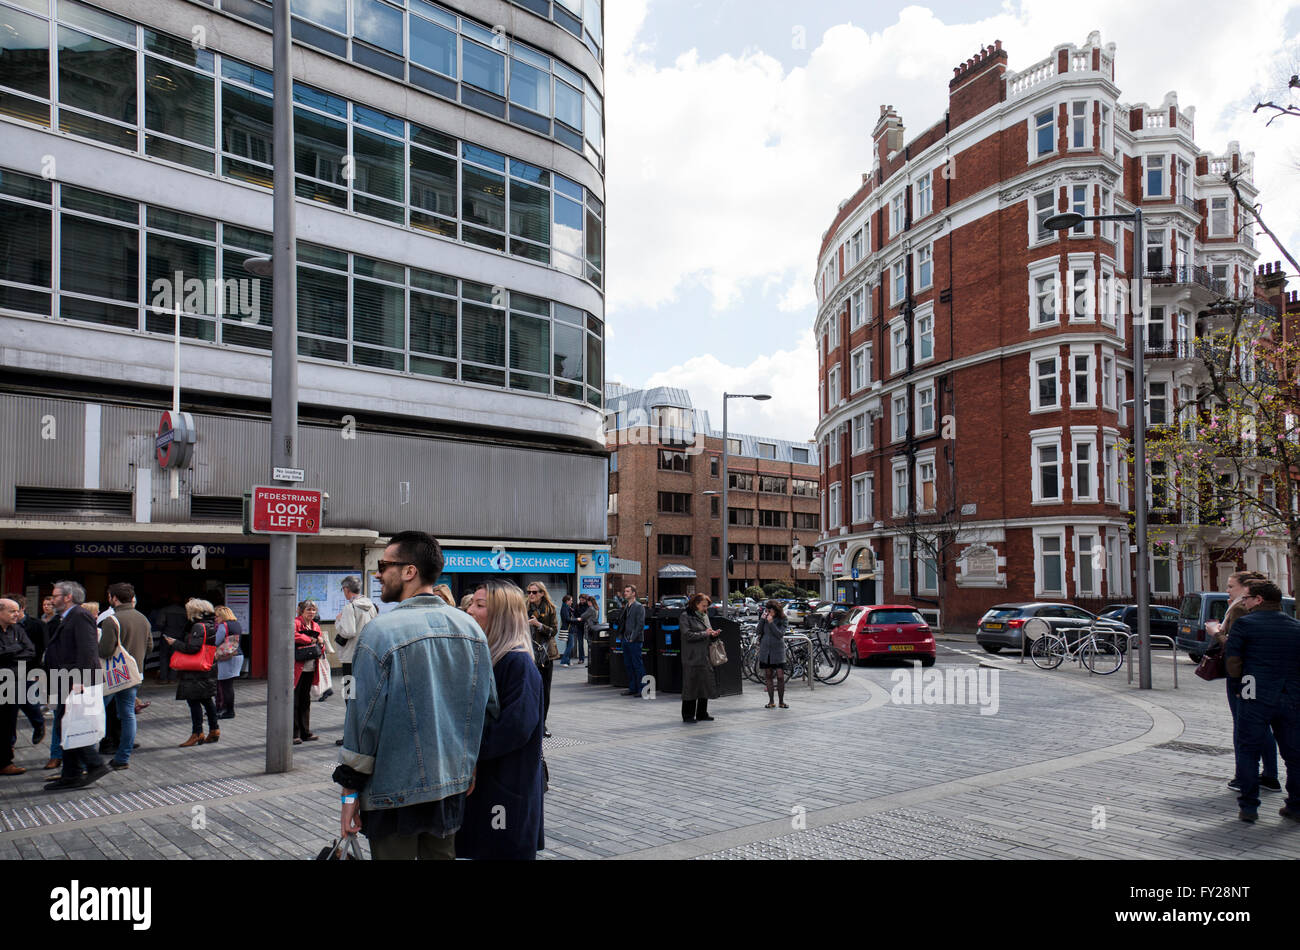 Sloane Square crossing to Underground - London UK Stock Photo